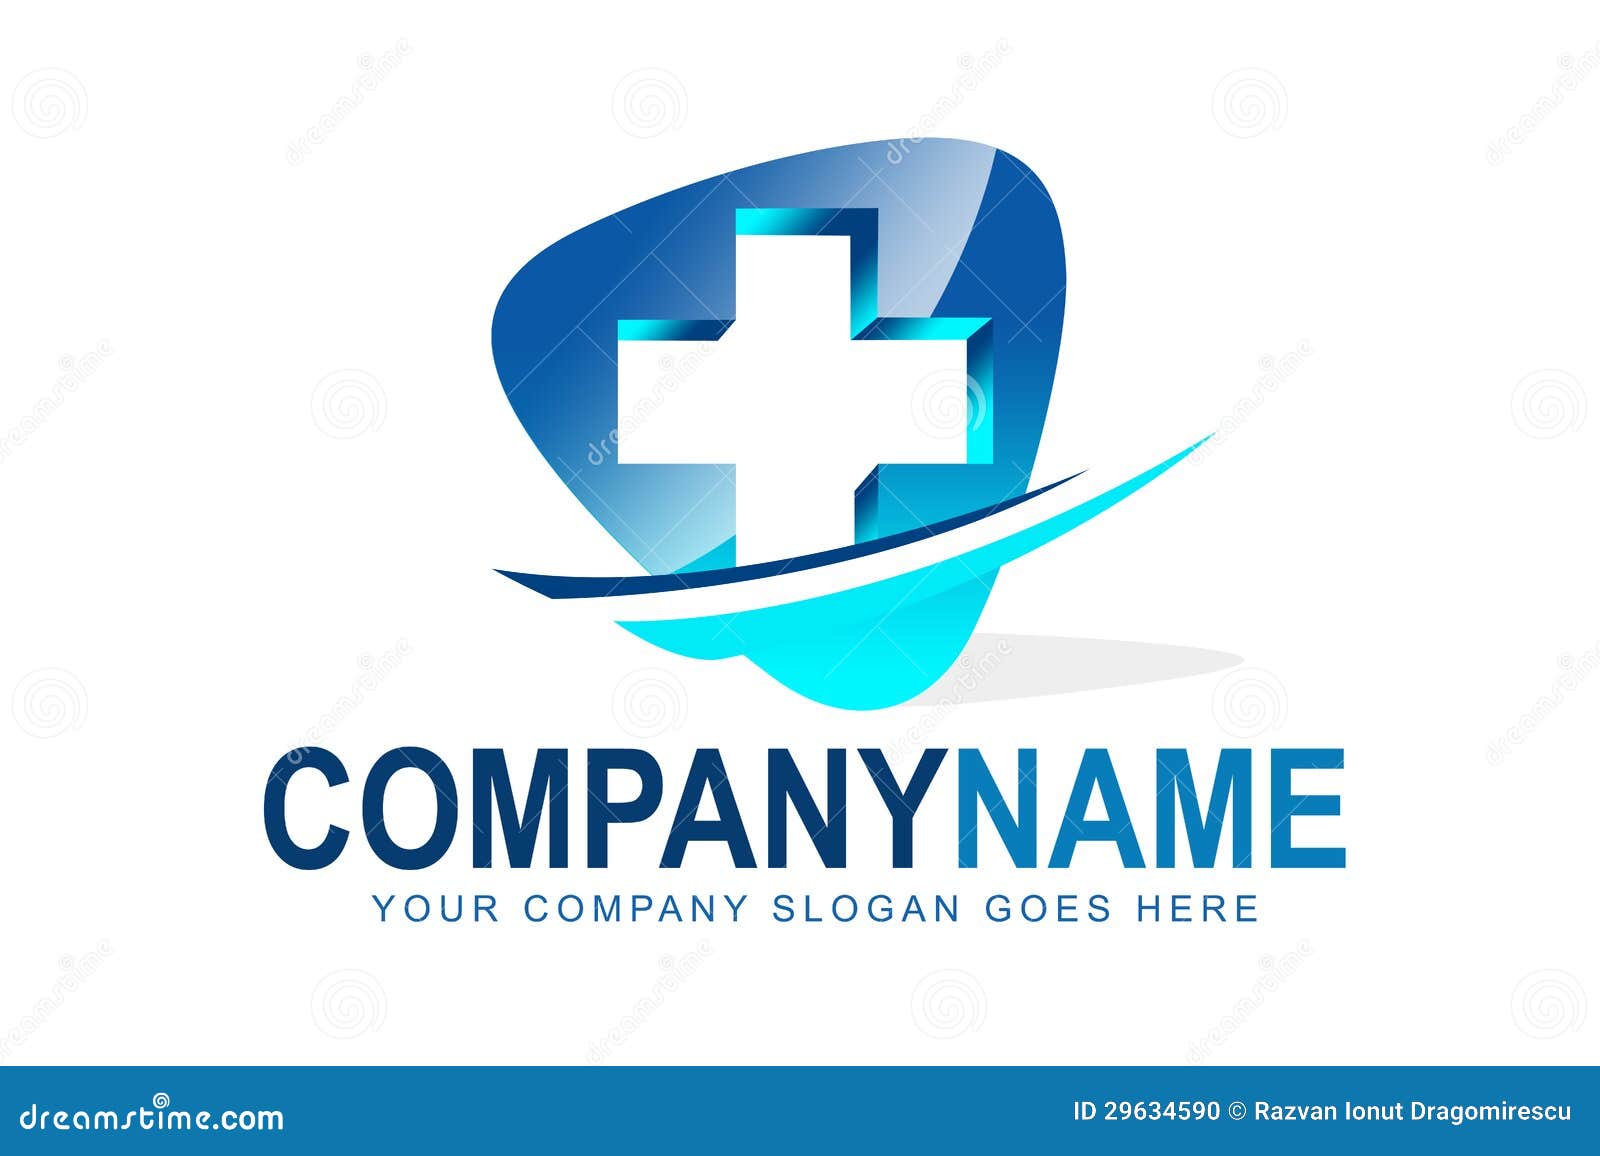 healthcare-medical-logo-29634590.jpg